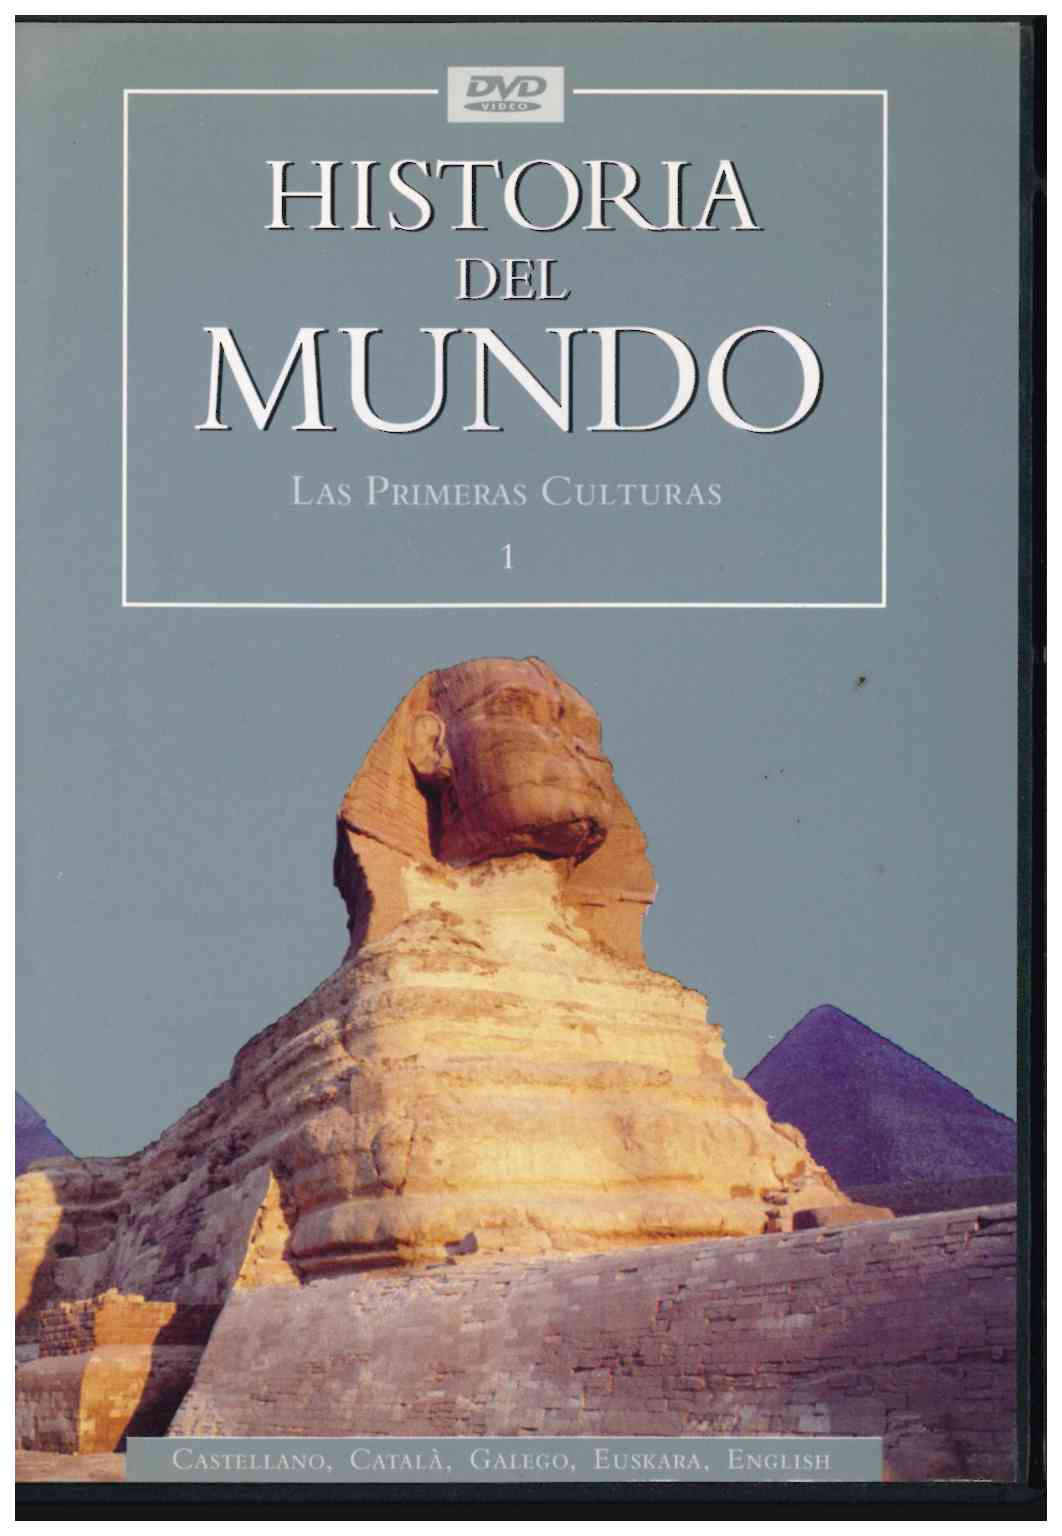 Historia del Mundo. 10 DVD. Larousse/Planeta/Plawerg 1999